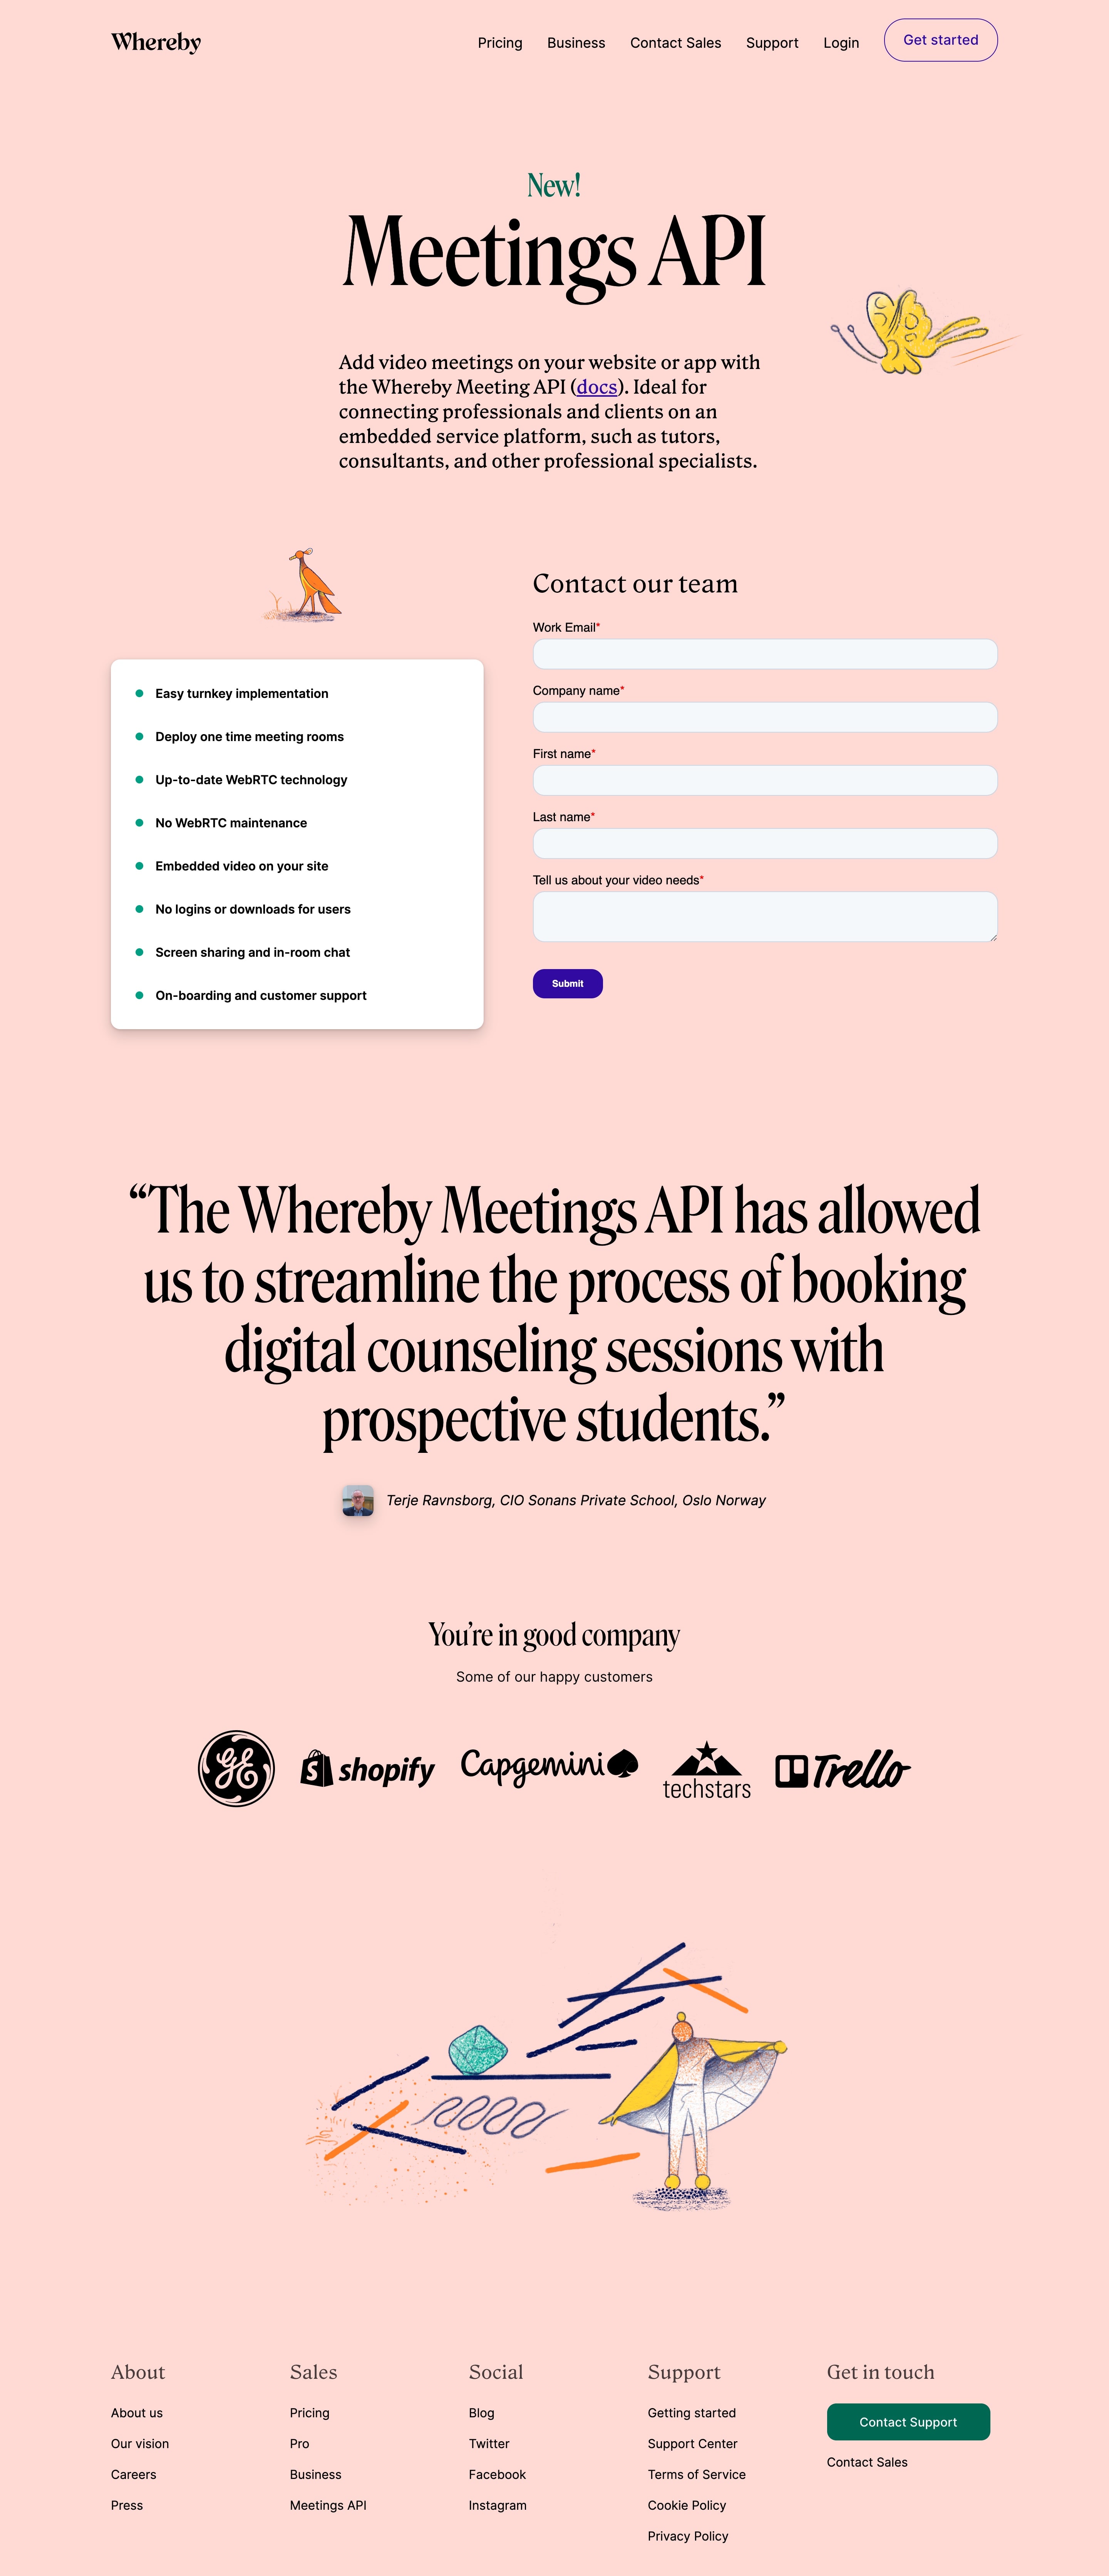 whereby meetings api page